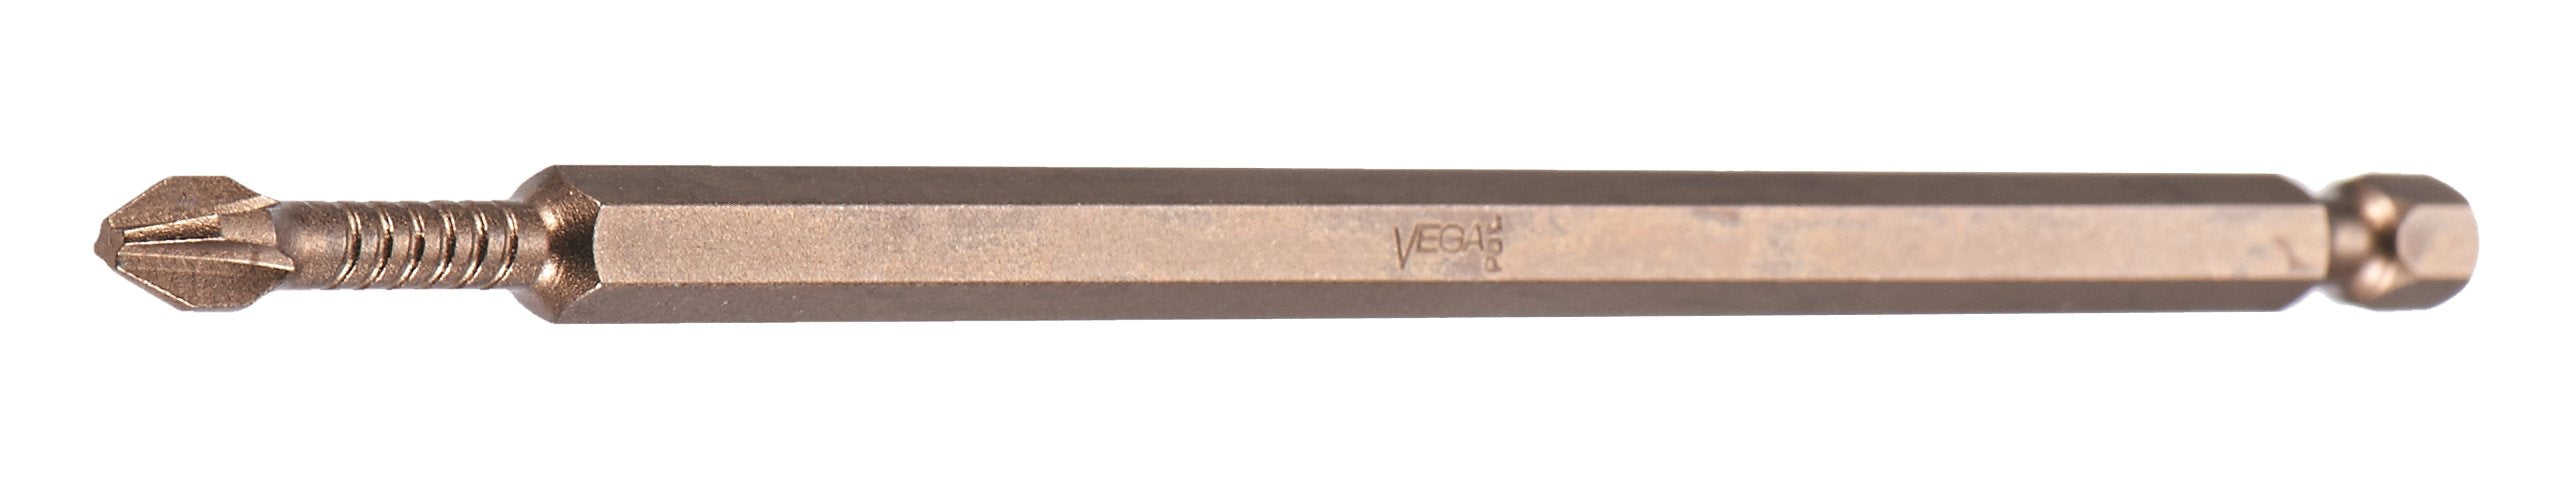 VEGA Industries VEGA #1 Phillips Impact Driver Bits. Professional Grade Impactech Impact Grade #1 Phillip 6inch Extra Long Bits. (Pack of 3) P1150P1A-3 #80